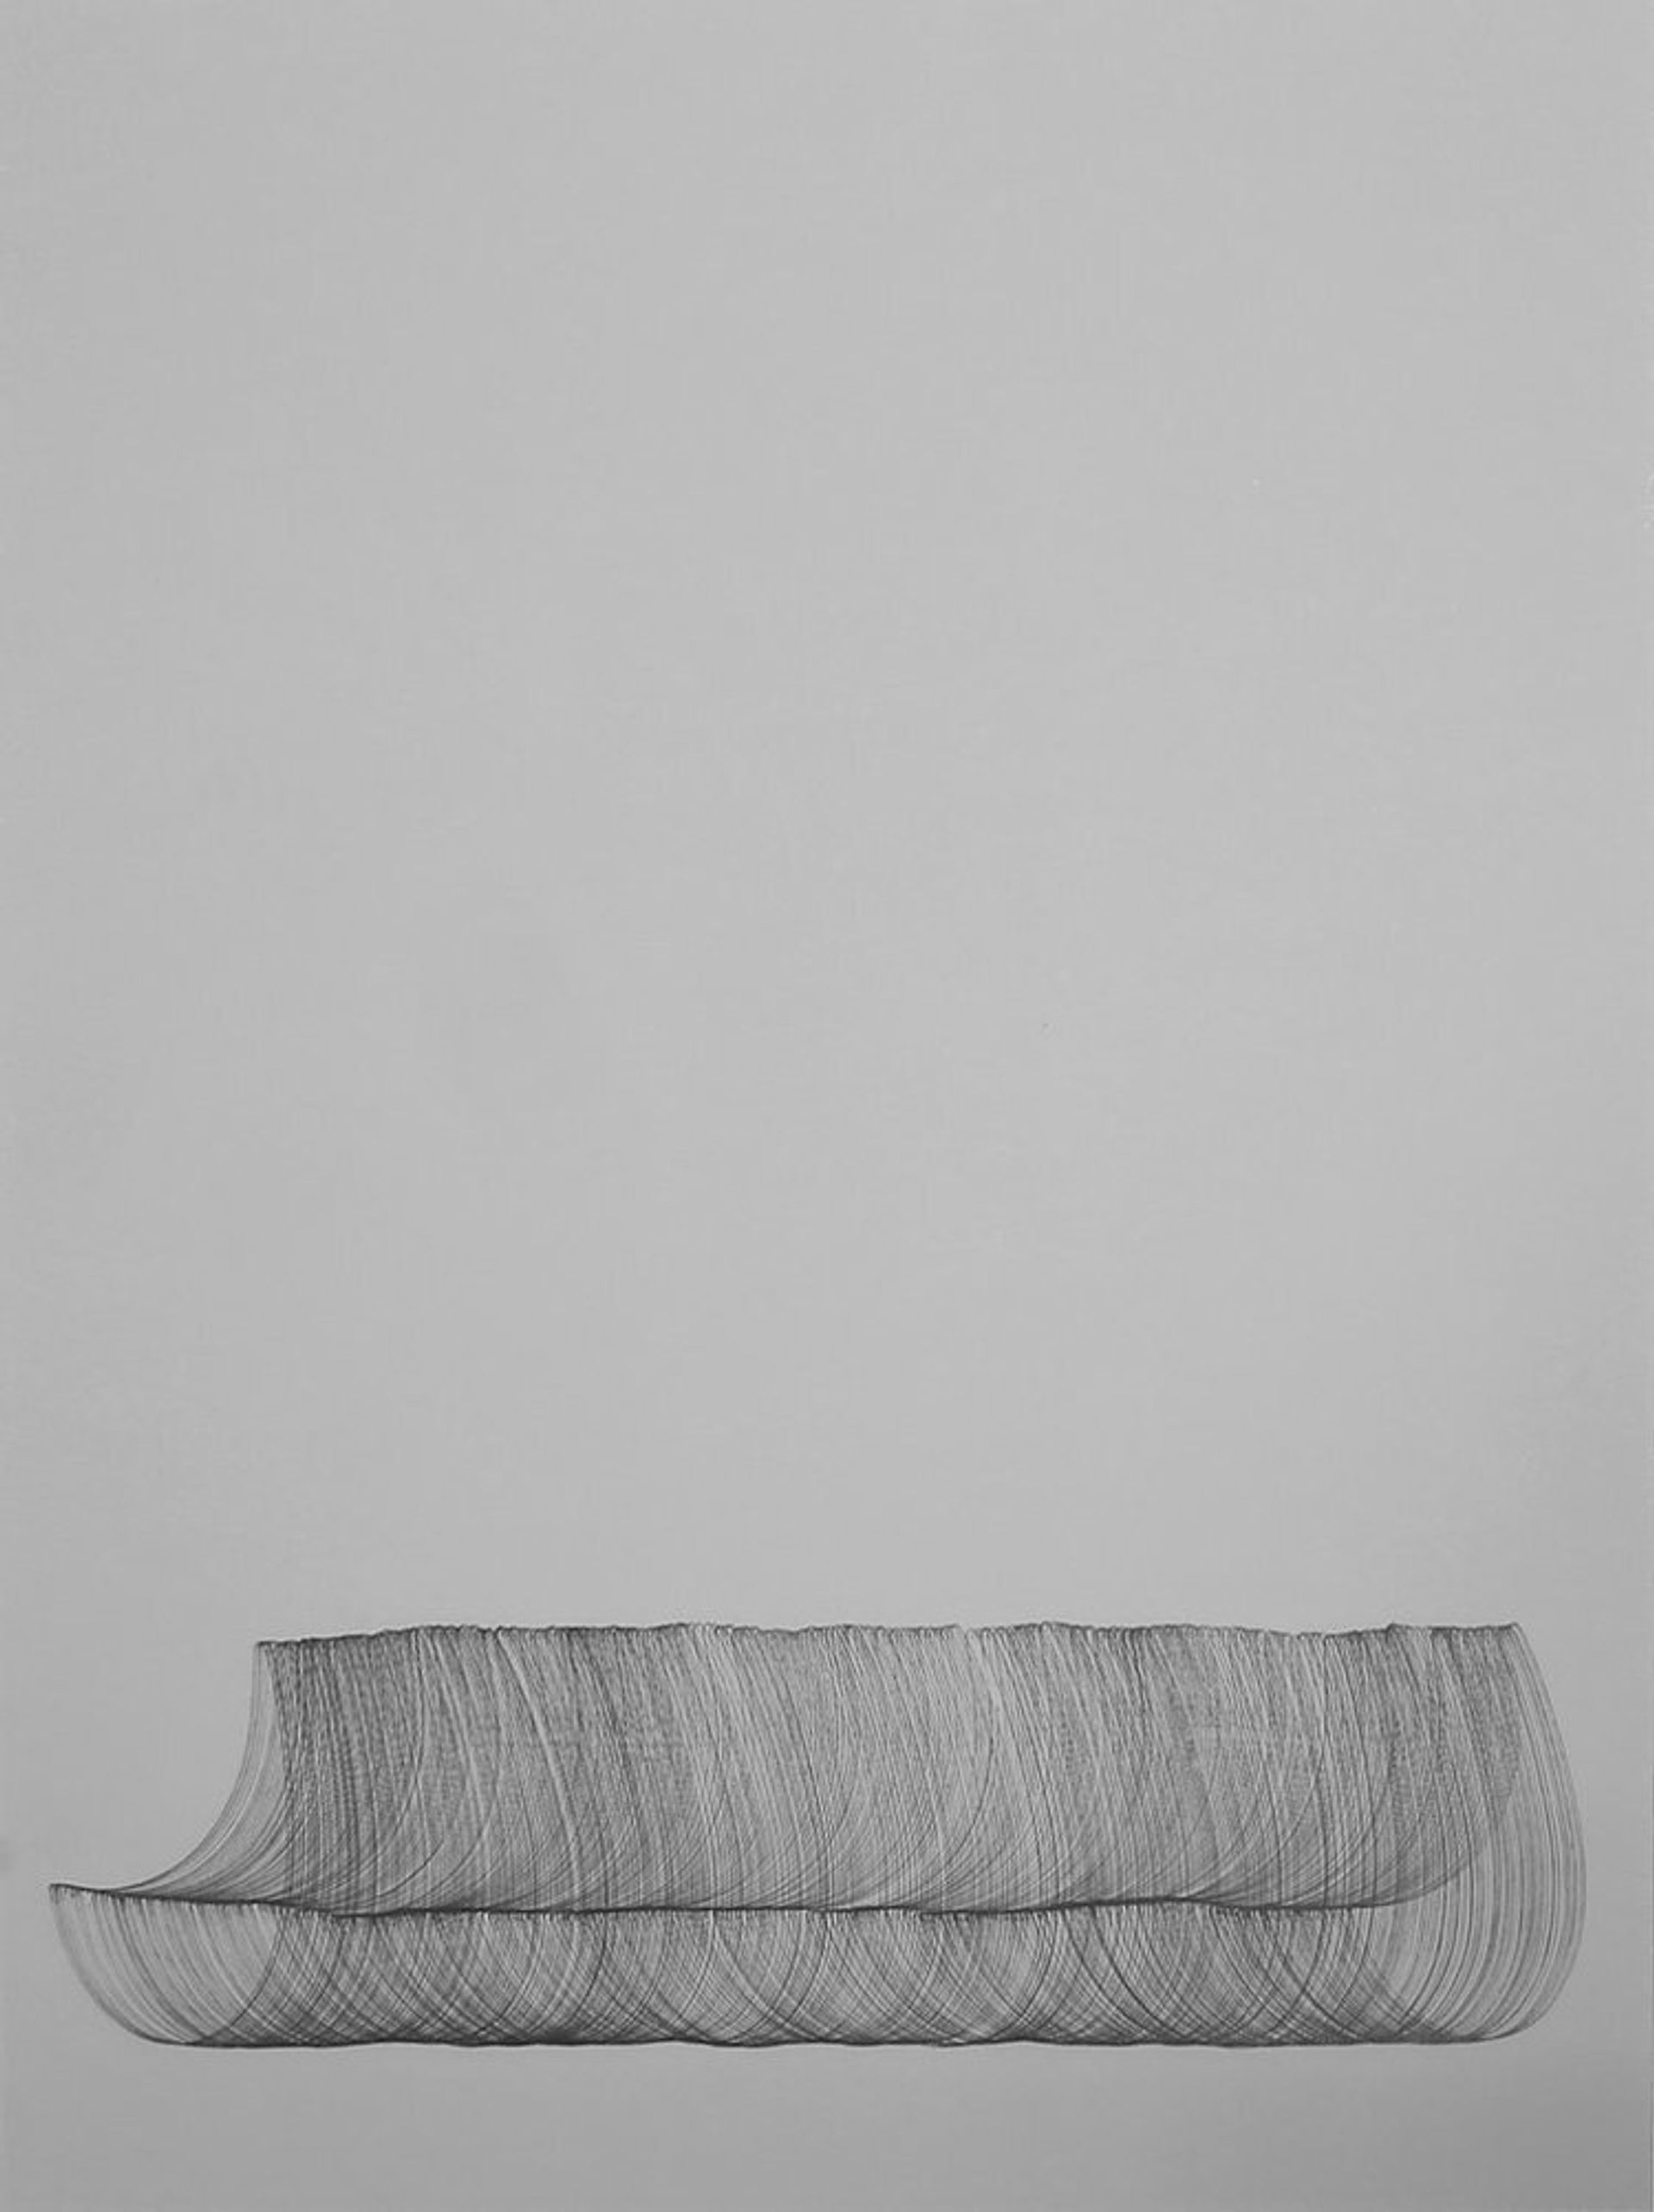 Anna Vogel, Untitled, 2015, ink on pigment print, 40 × 30 cm